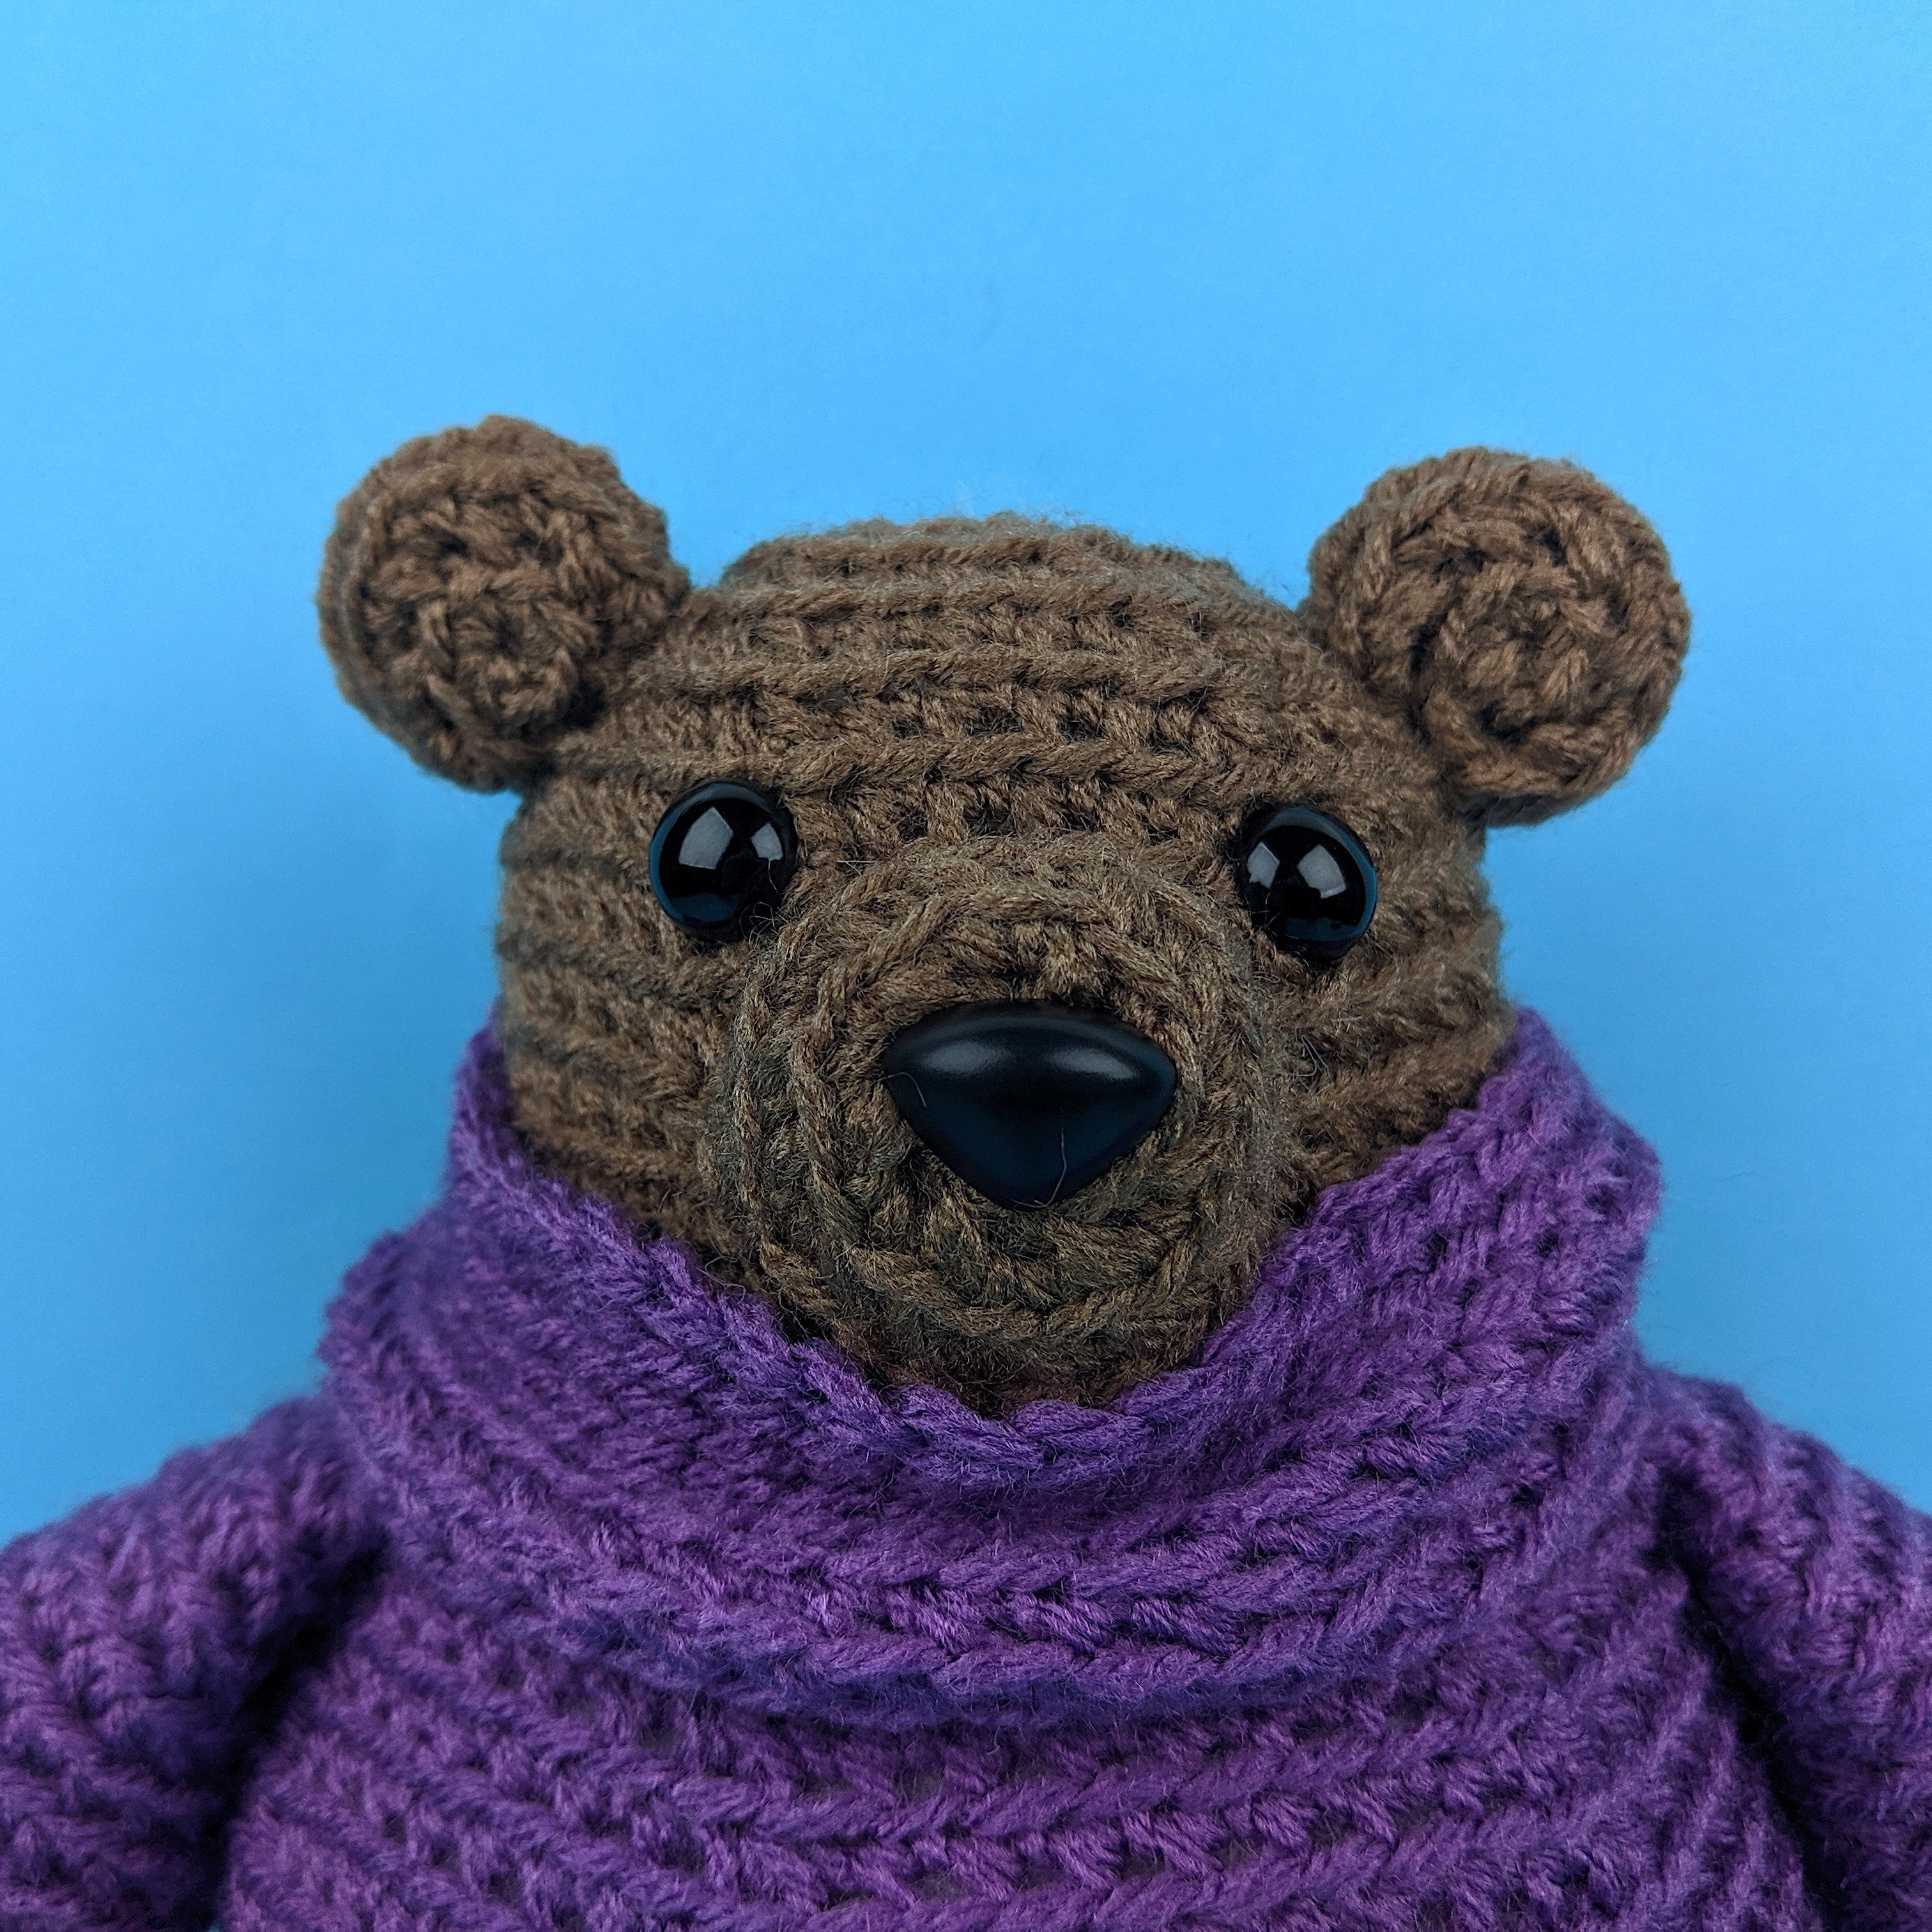 Byron Bear Crochet Amigurumi Pattern